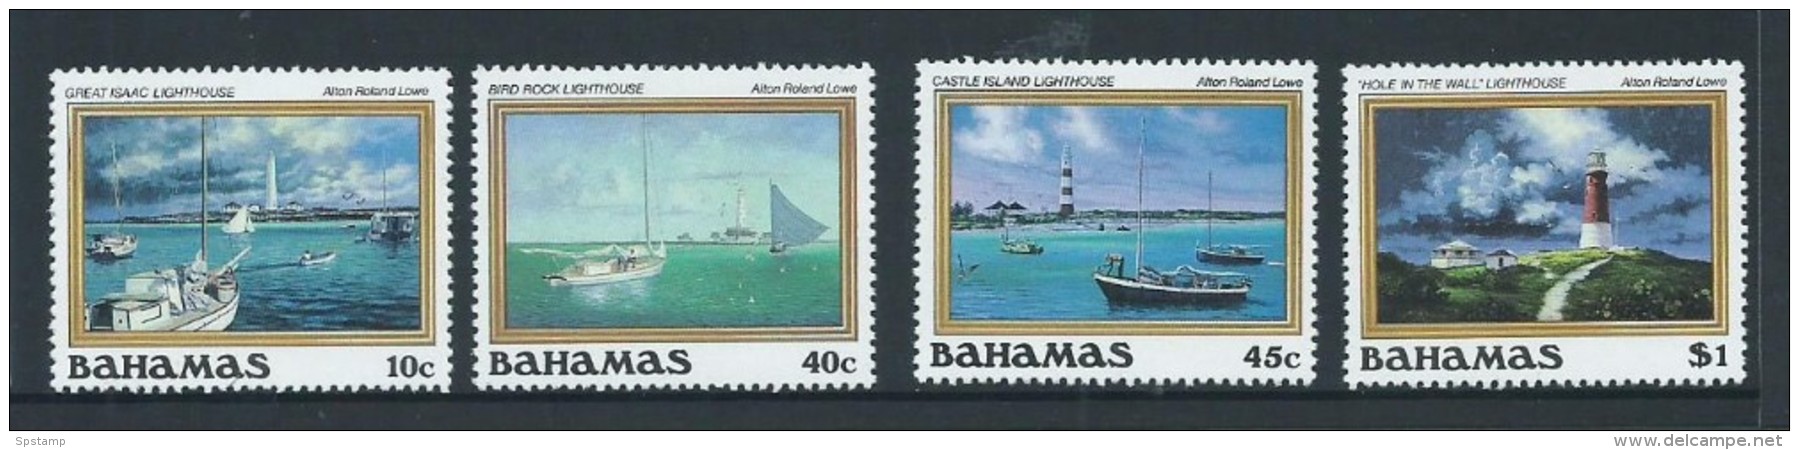 Bahamas 1987 Airmail Plane Set Of 4 MNH - Bahamas (1973-...)